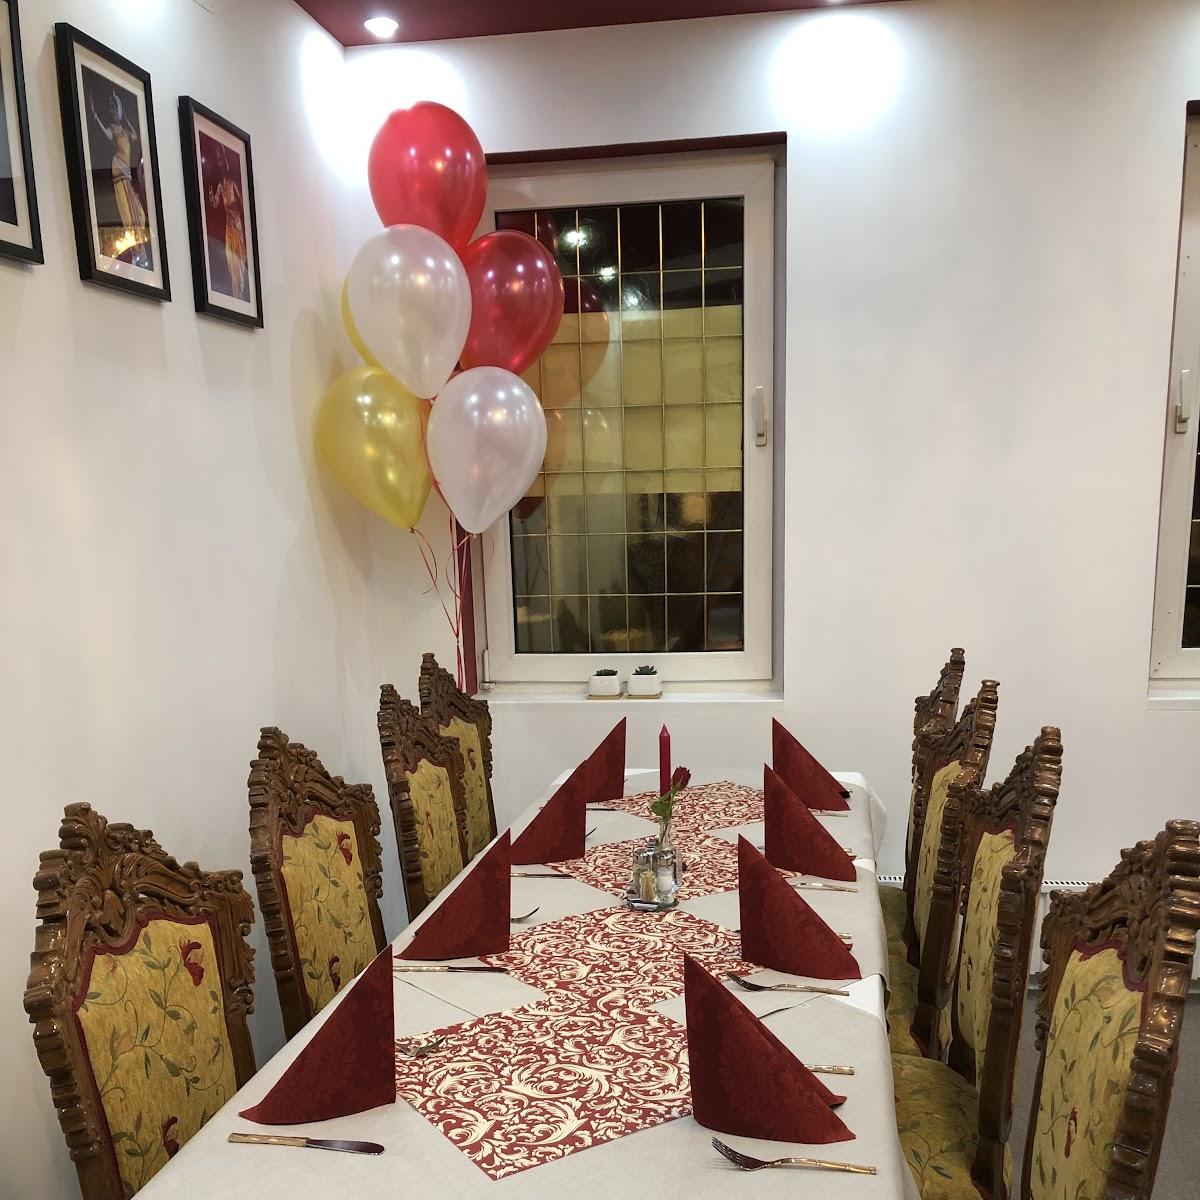 Restaurant "Maharaja Indisches Restaurant" in Roth